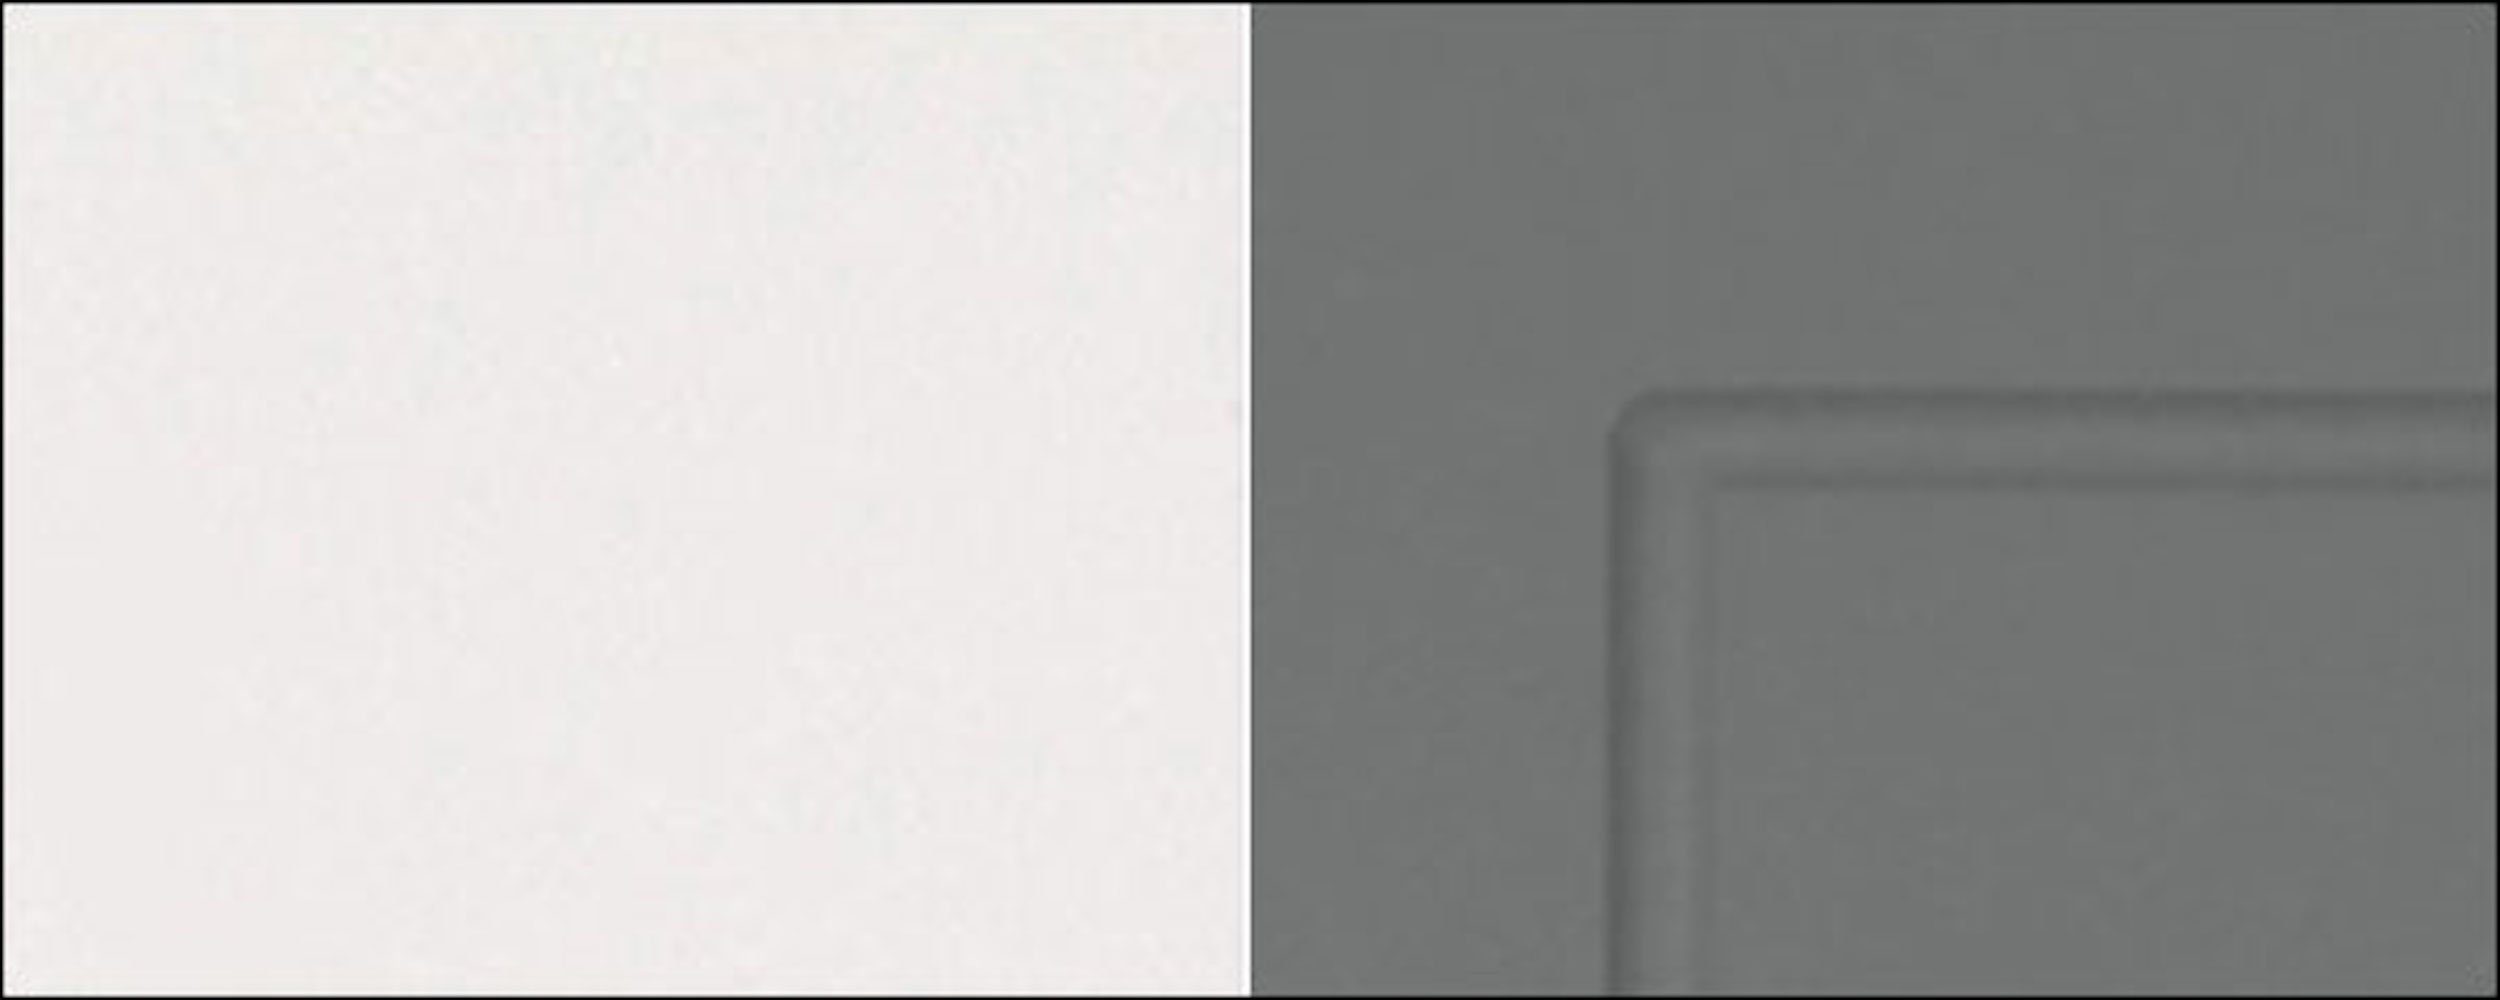 Kvantum 40cm Klapphängeschrank Feldmann-Wohnen wählbar und (Kvantum) 1-türig Front- dust Korpusfarbe grey matt